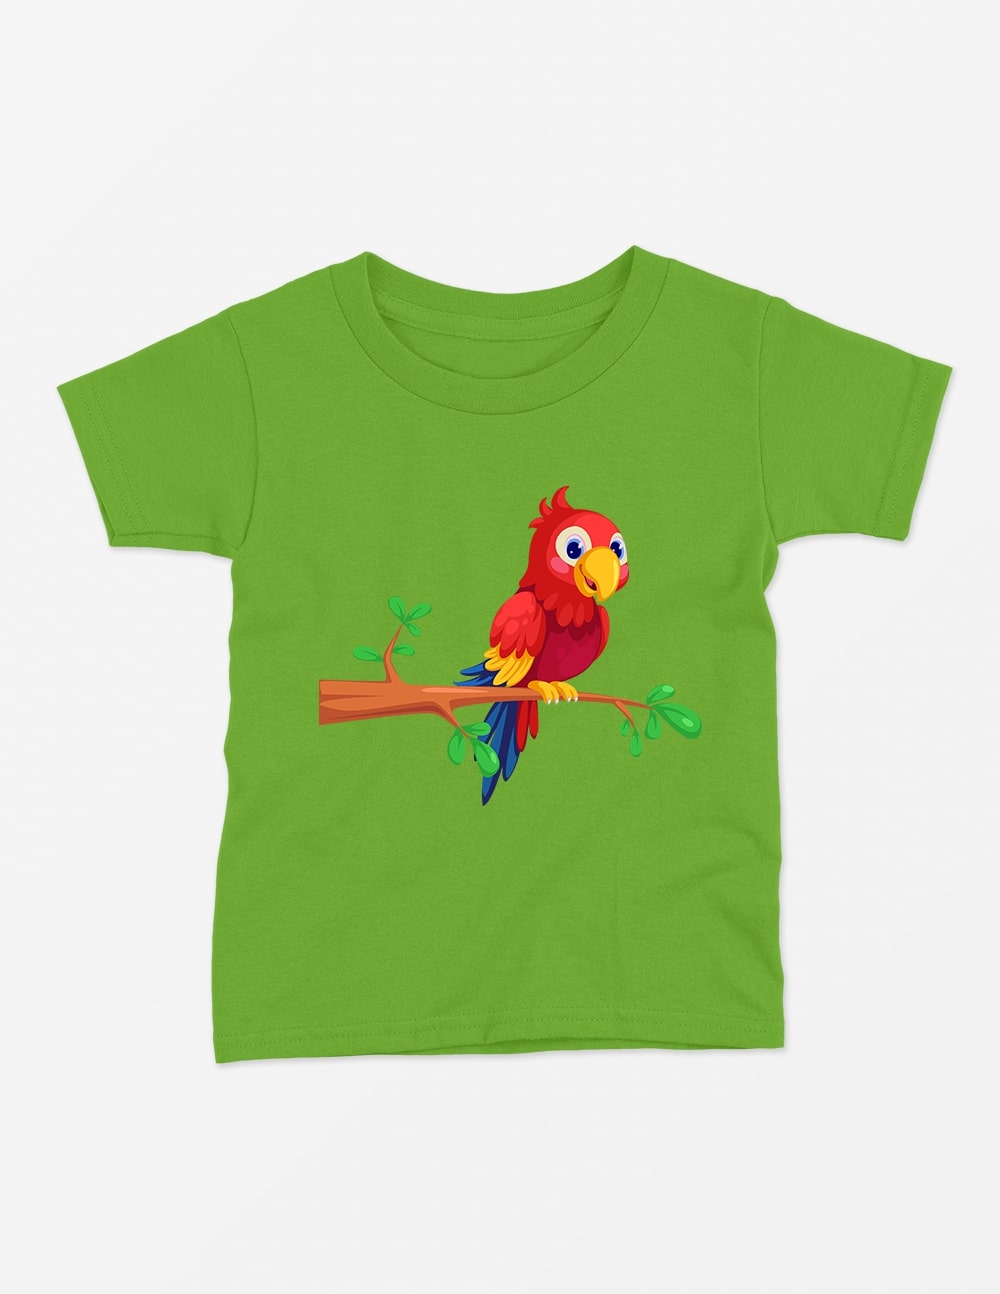 Parrot green Tshirt